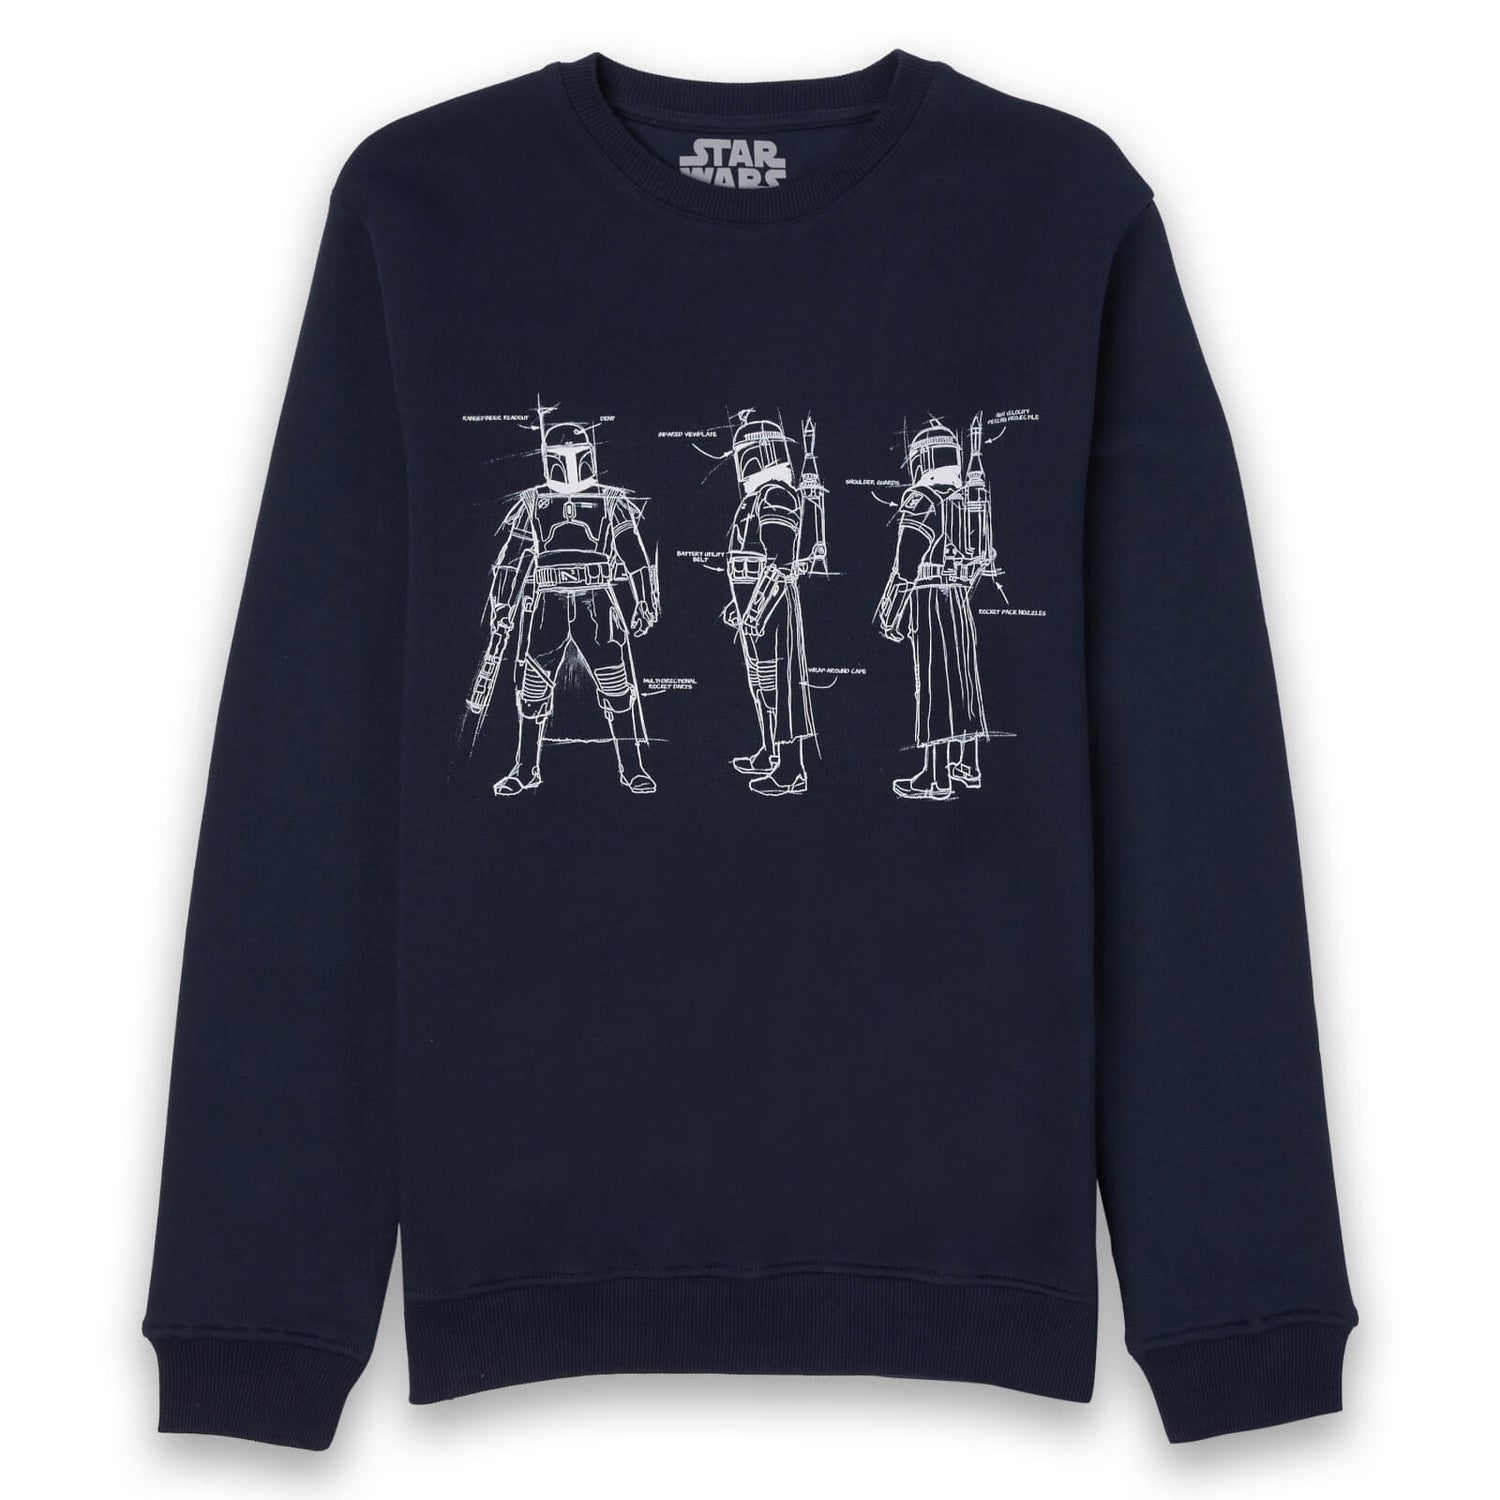 Star Wars Rotating Sketches Unisex Sweatshirt - Navy